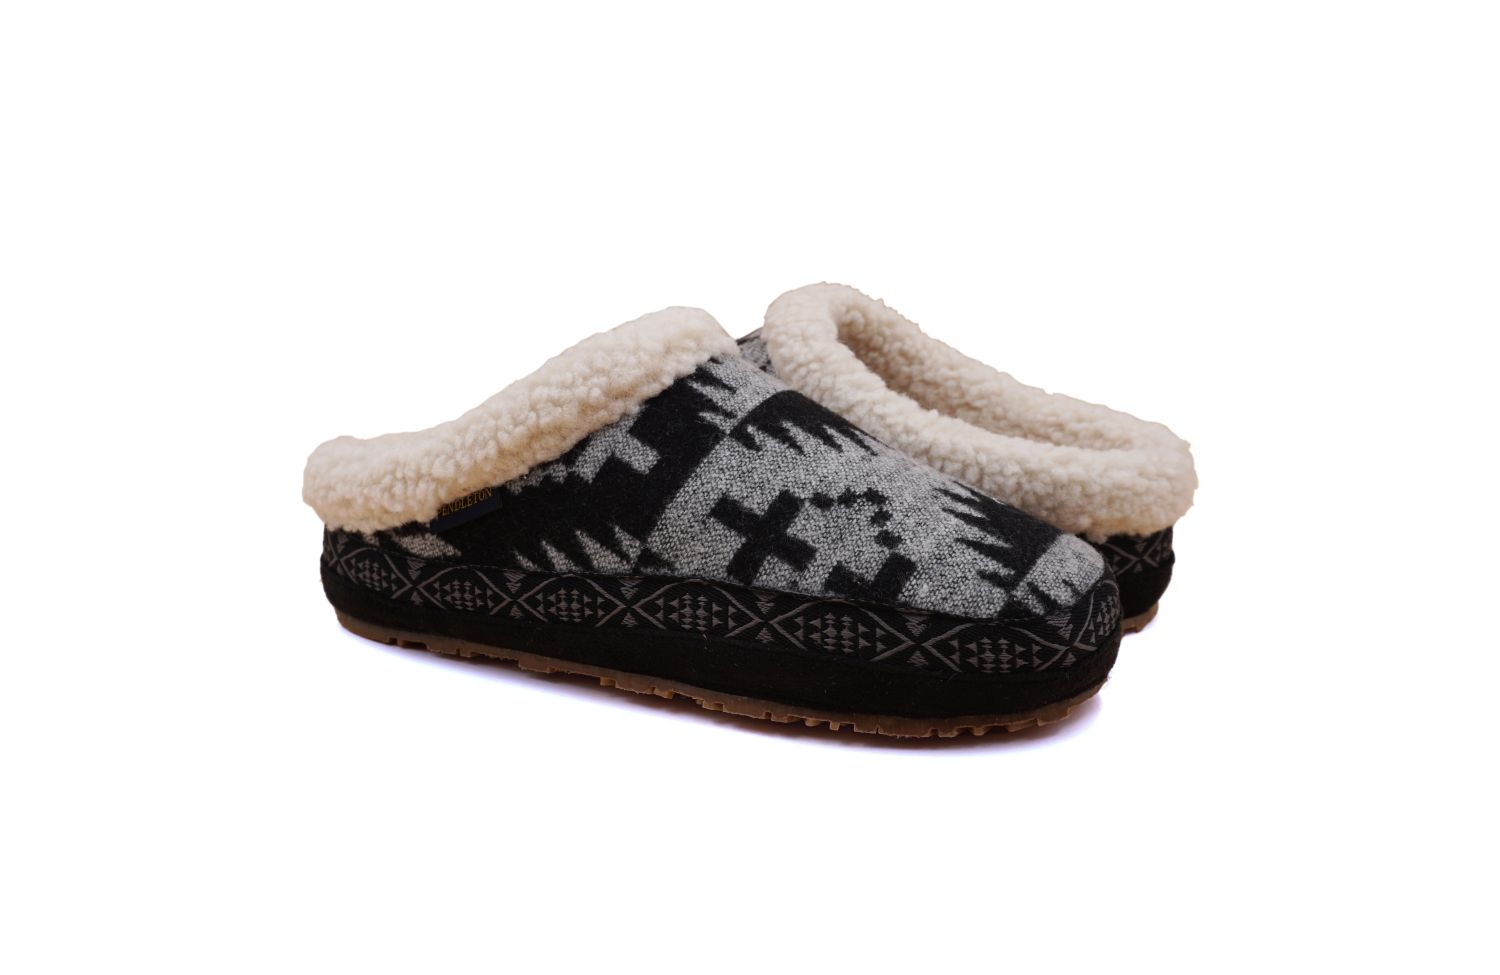 washable slipper